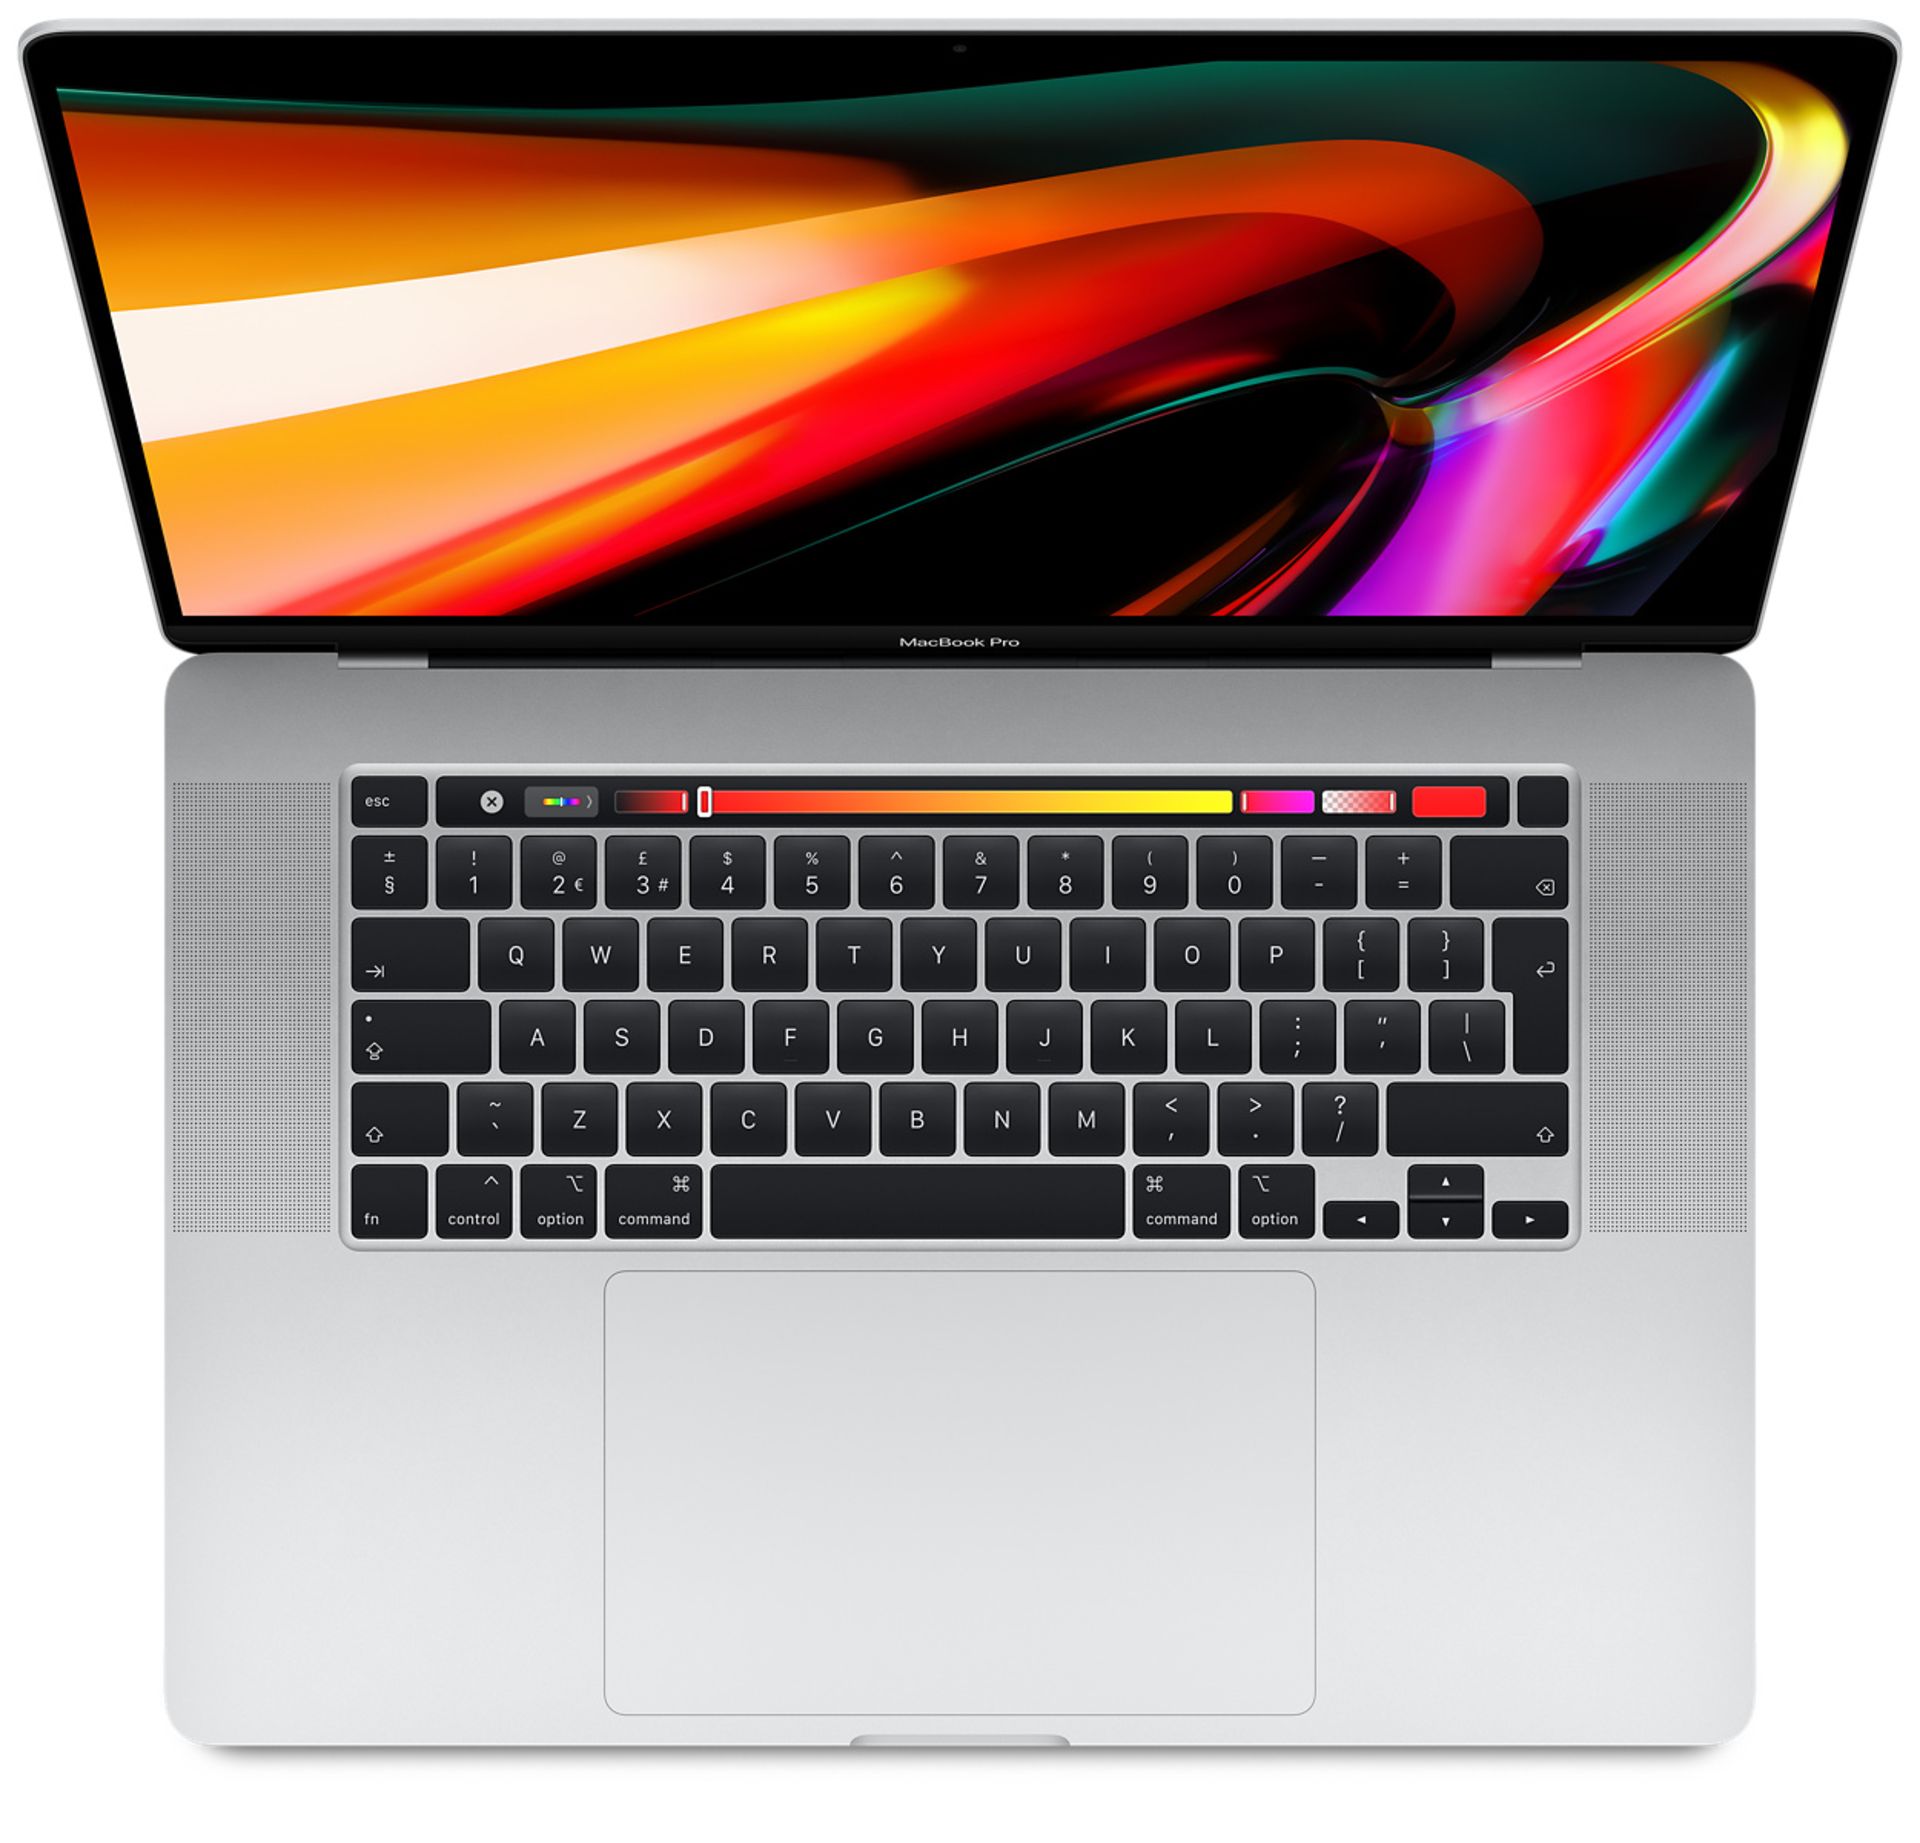 Apple MacBook Pro 15” Touchbar (2019) Sonoma Intel Core i7-9750H 16GB DDR4 256GB SSD Office